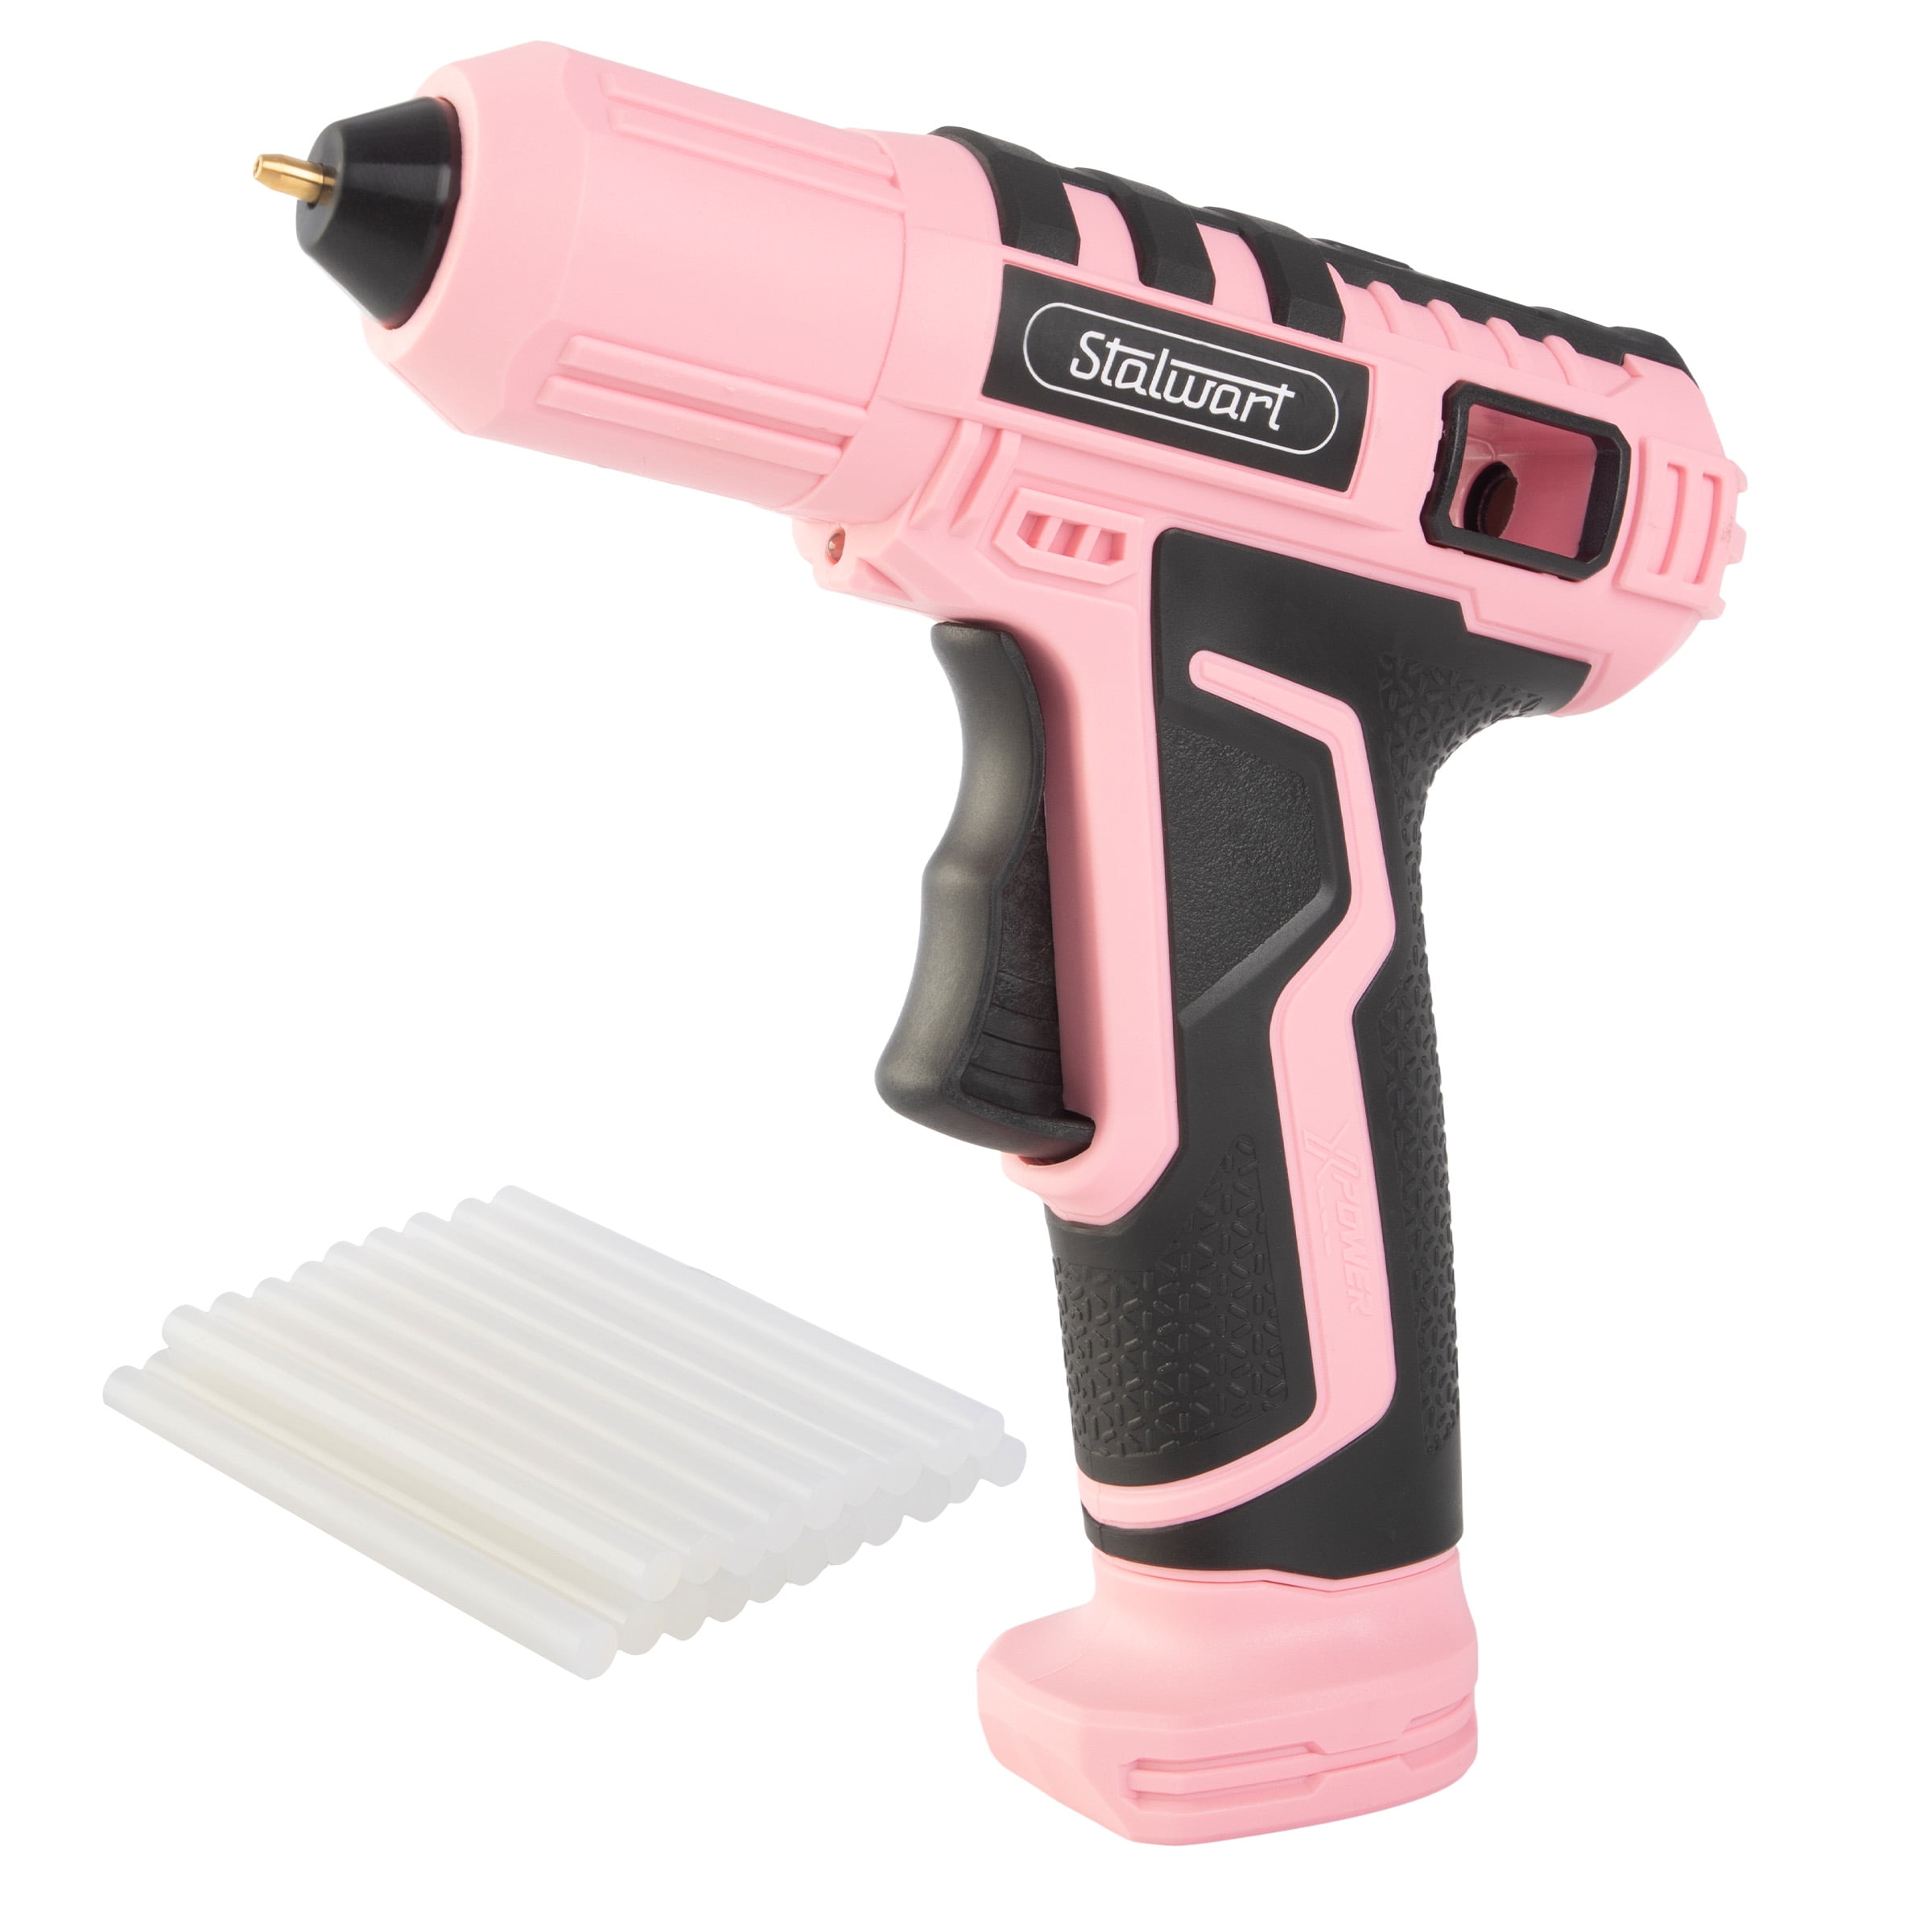 American Crafts - Adhesives - Glue Gun - Sticky Thumb - Cordless Hot Glue  Gun